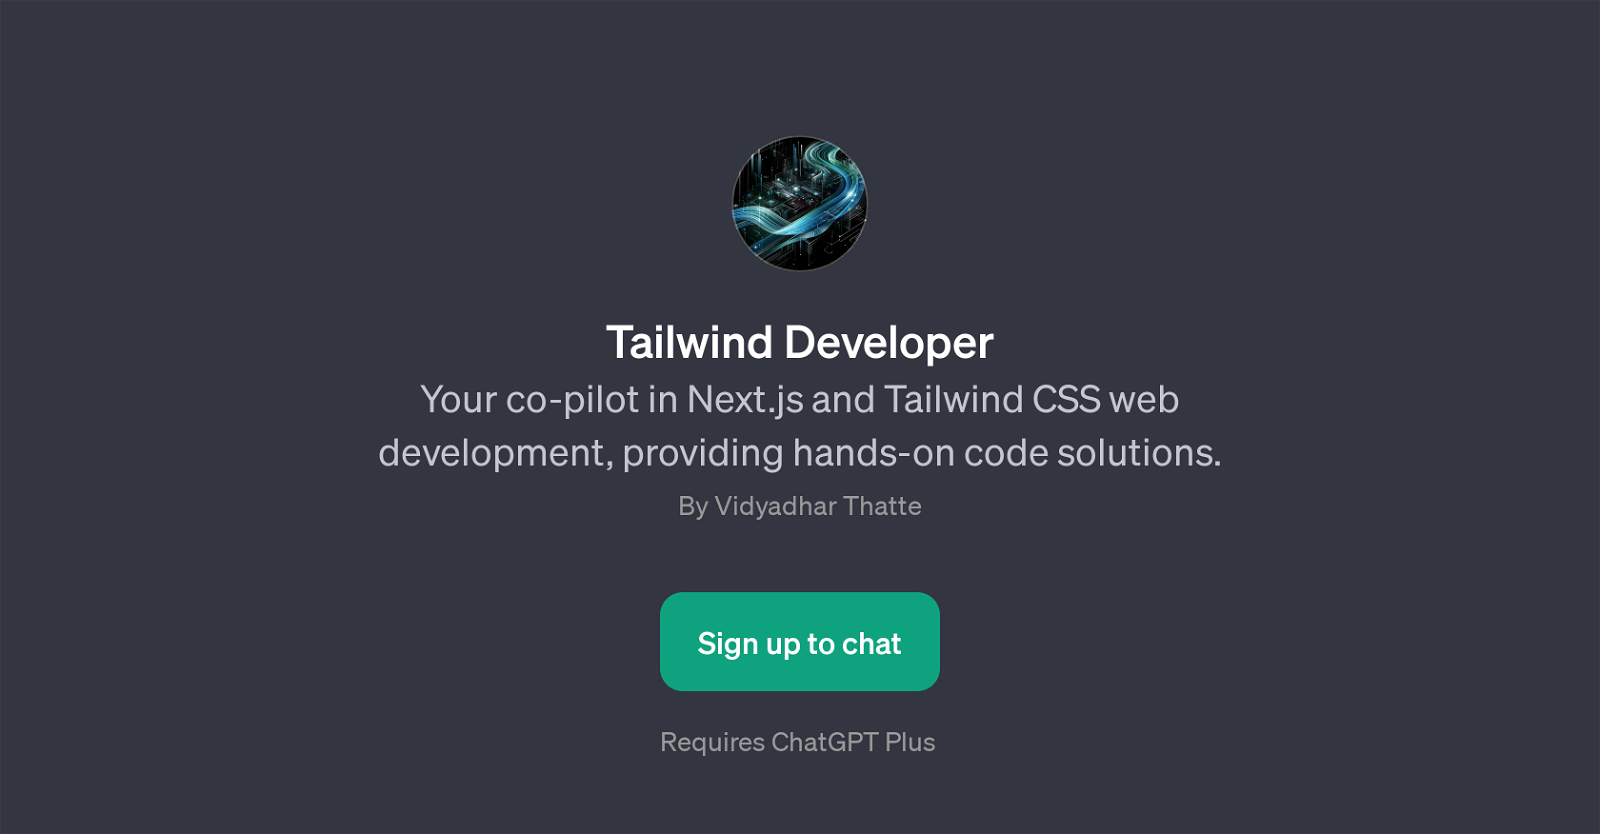 Tailwind Developer website